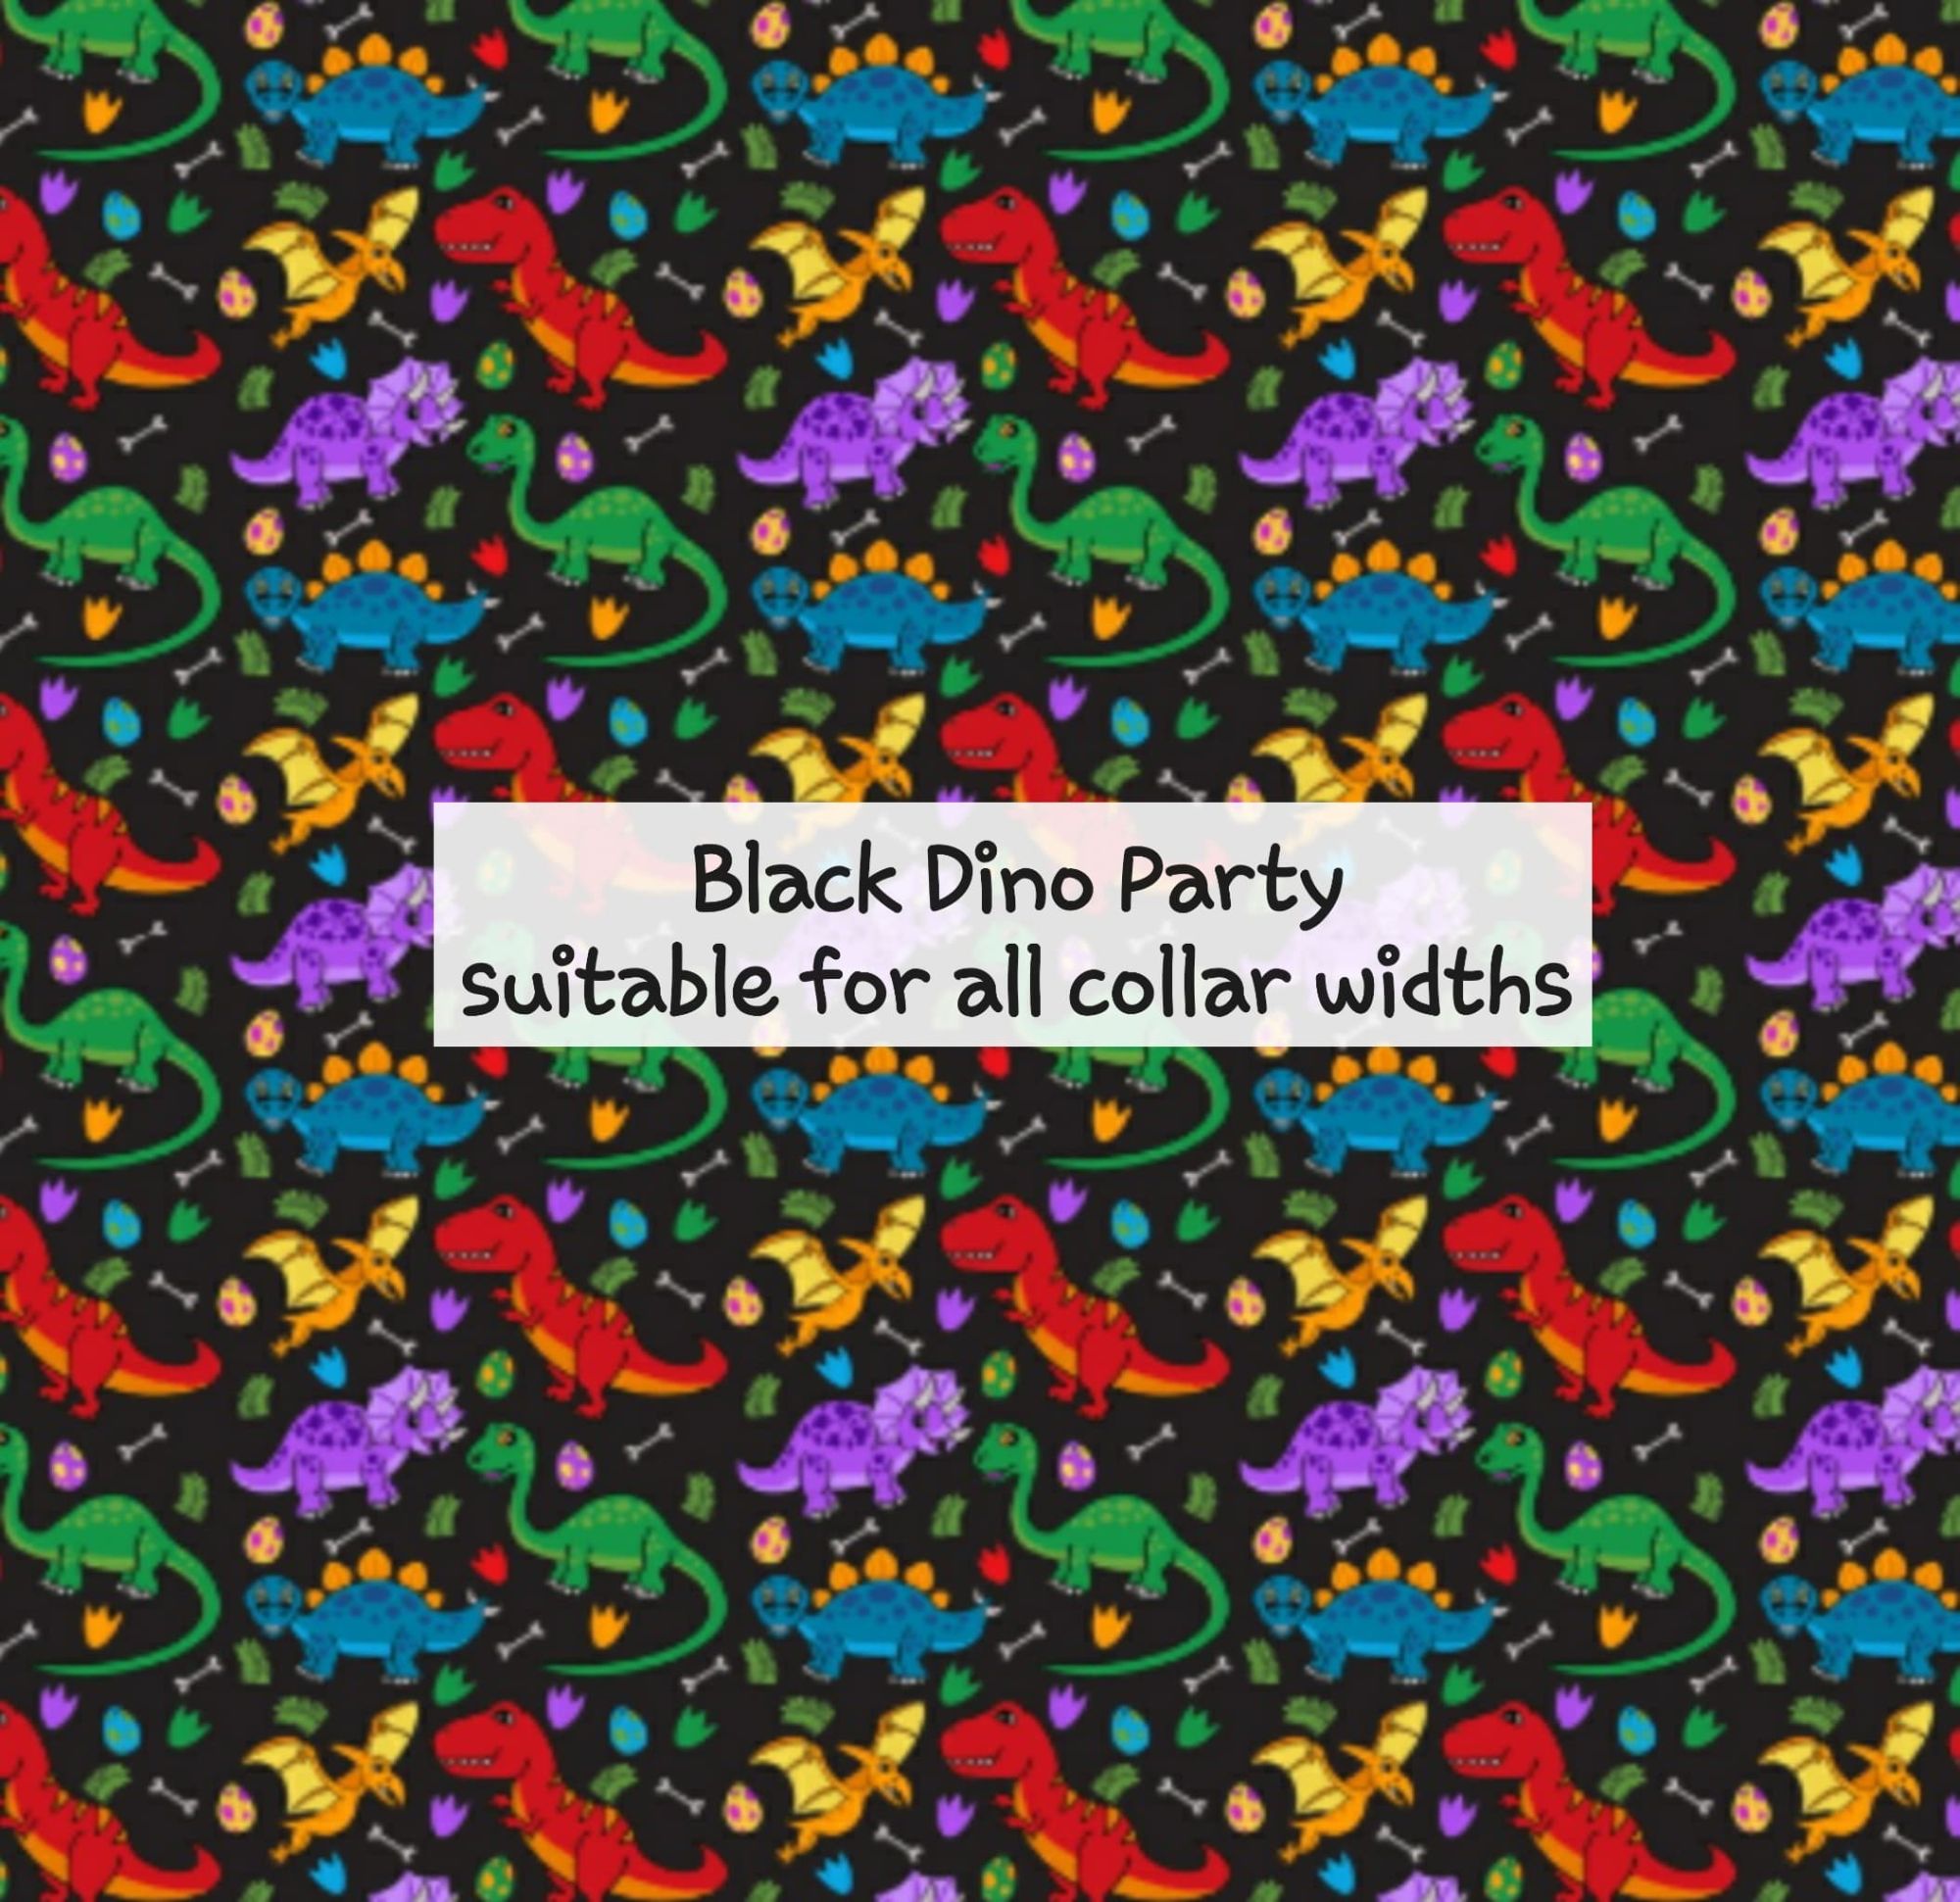 Black Dino Party